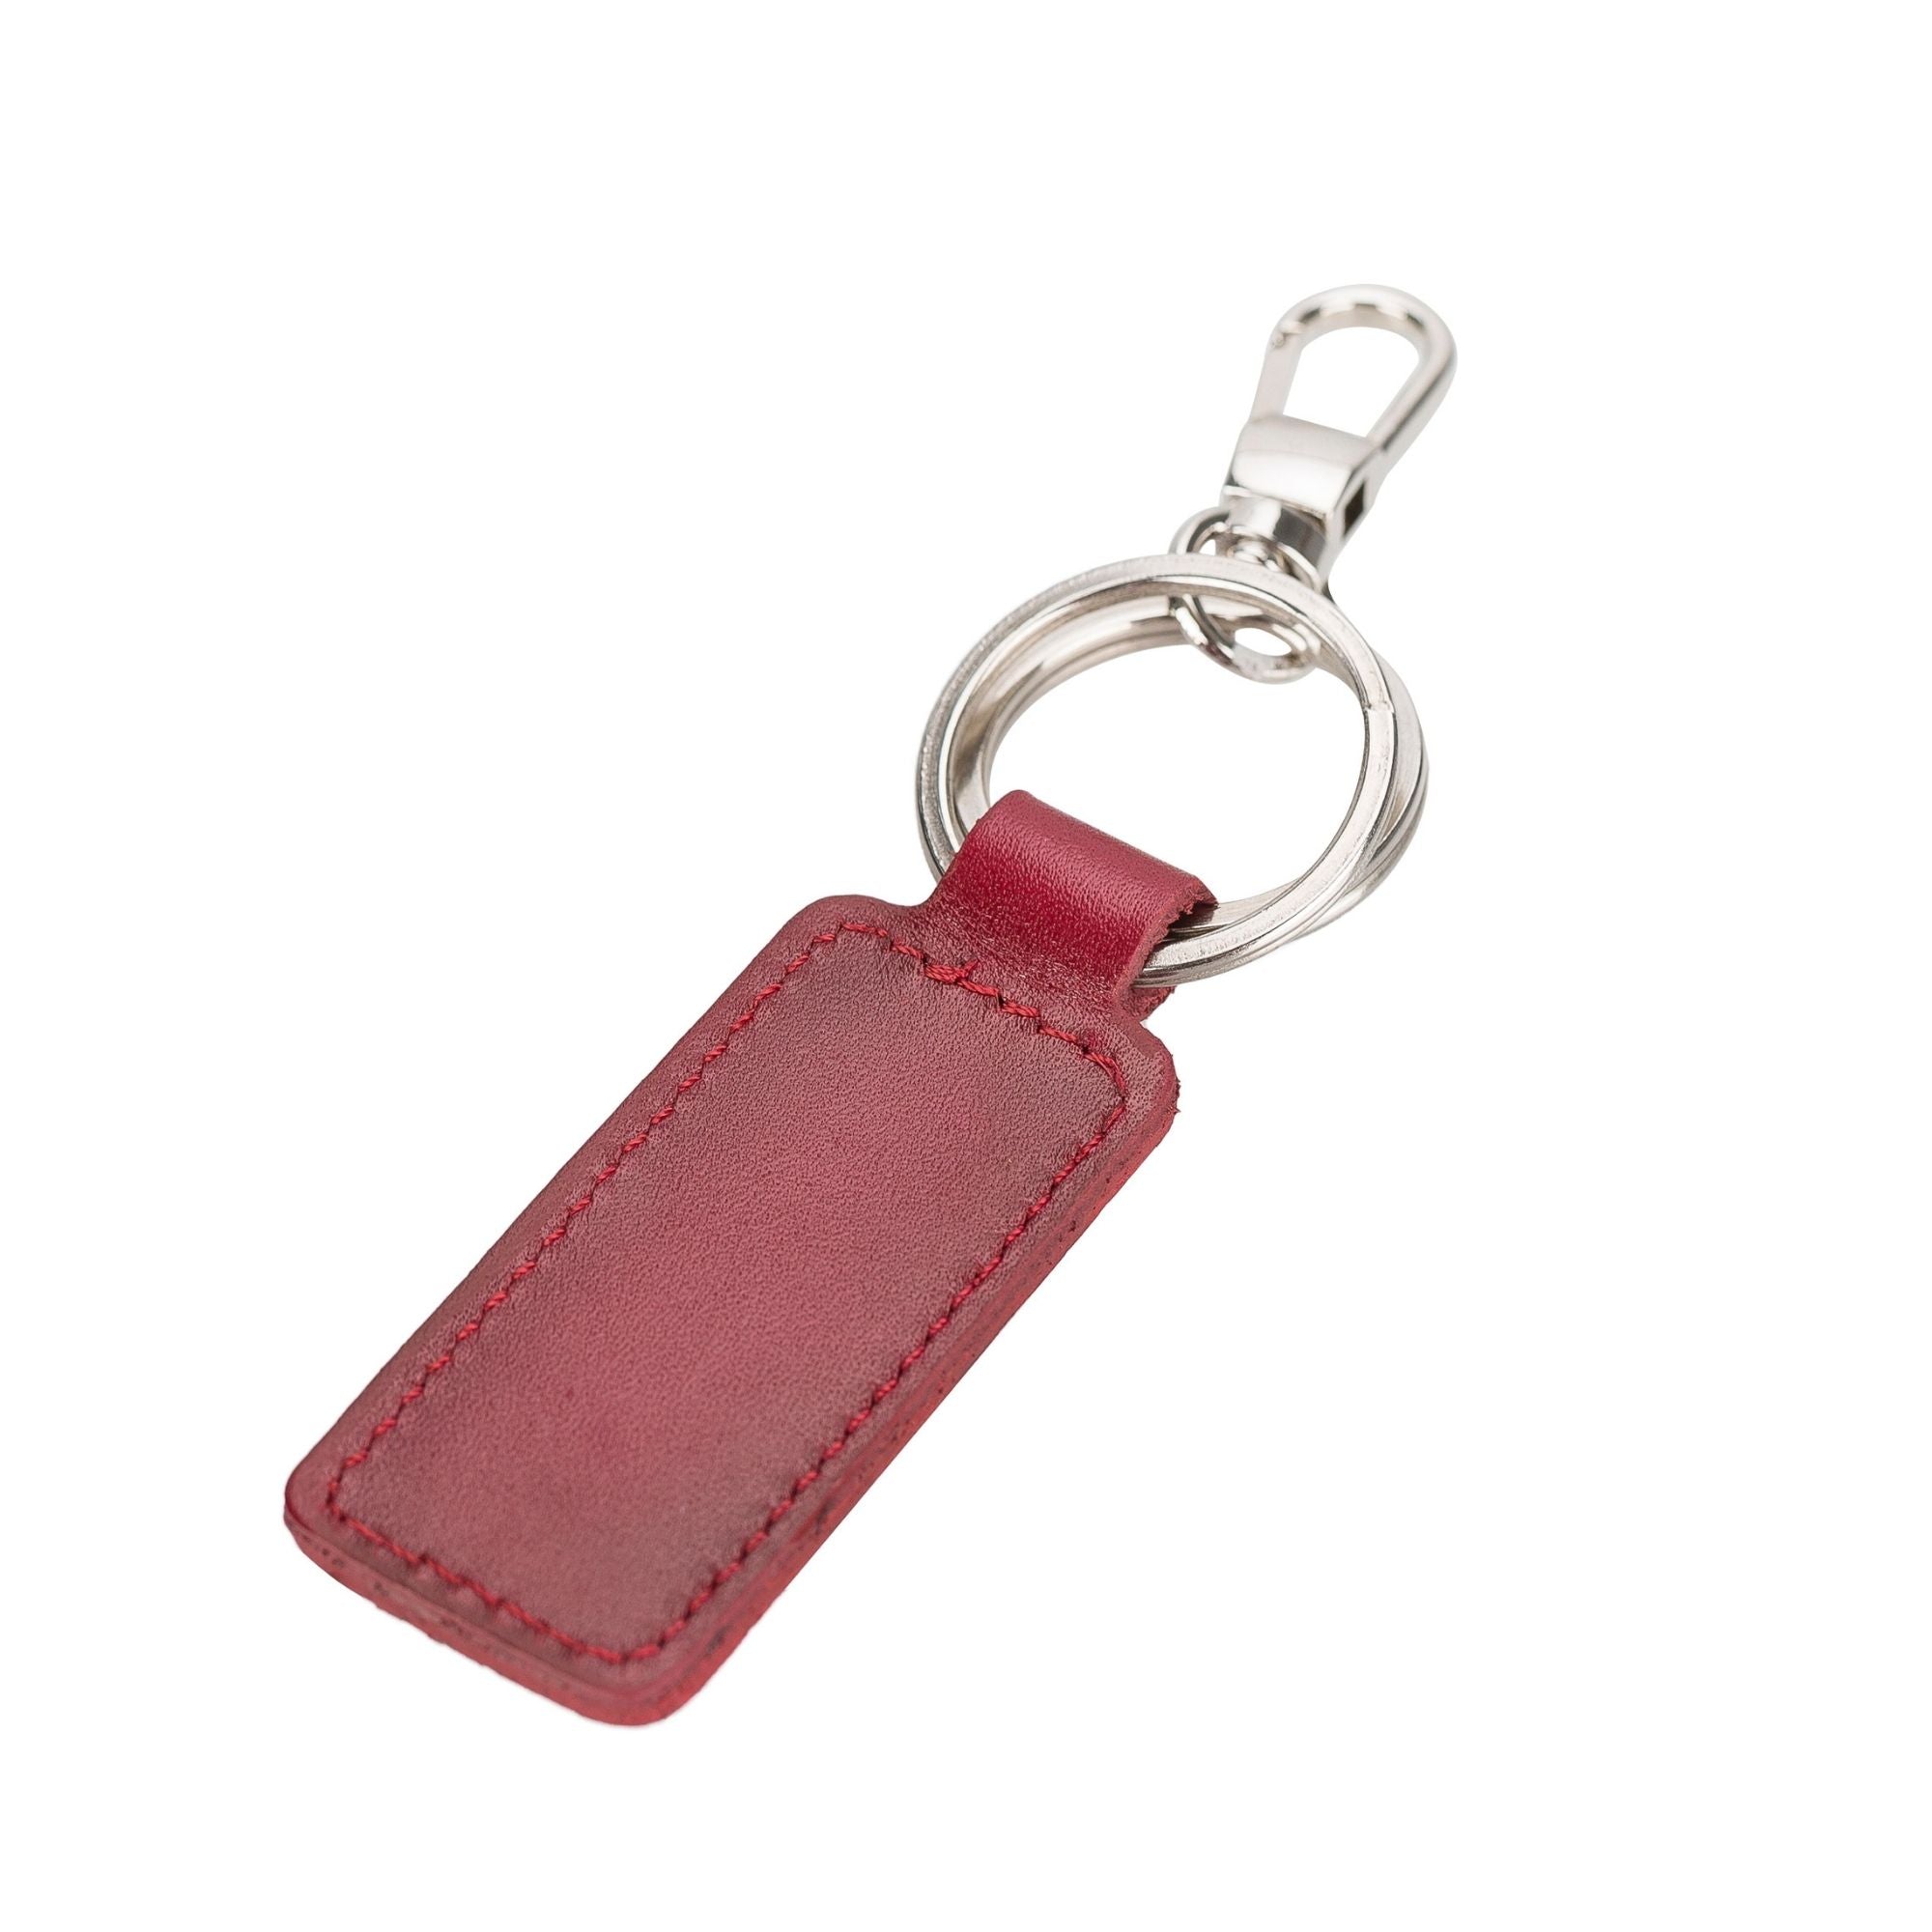 Thermopolis Handmade Genuine Leather Keychains - Red - TORONATA